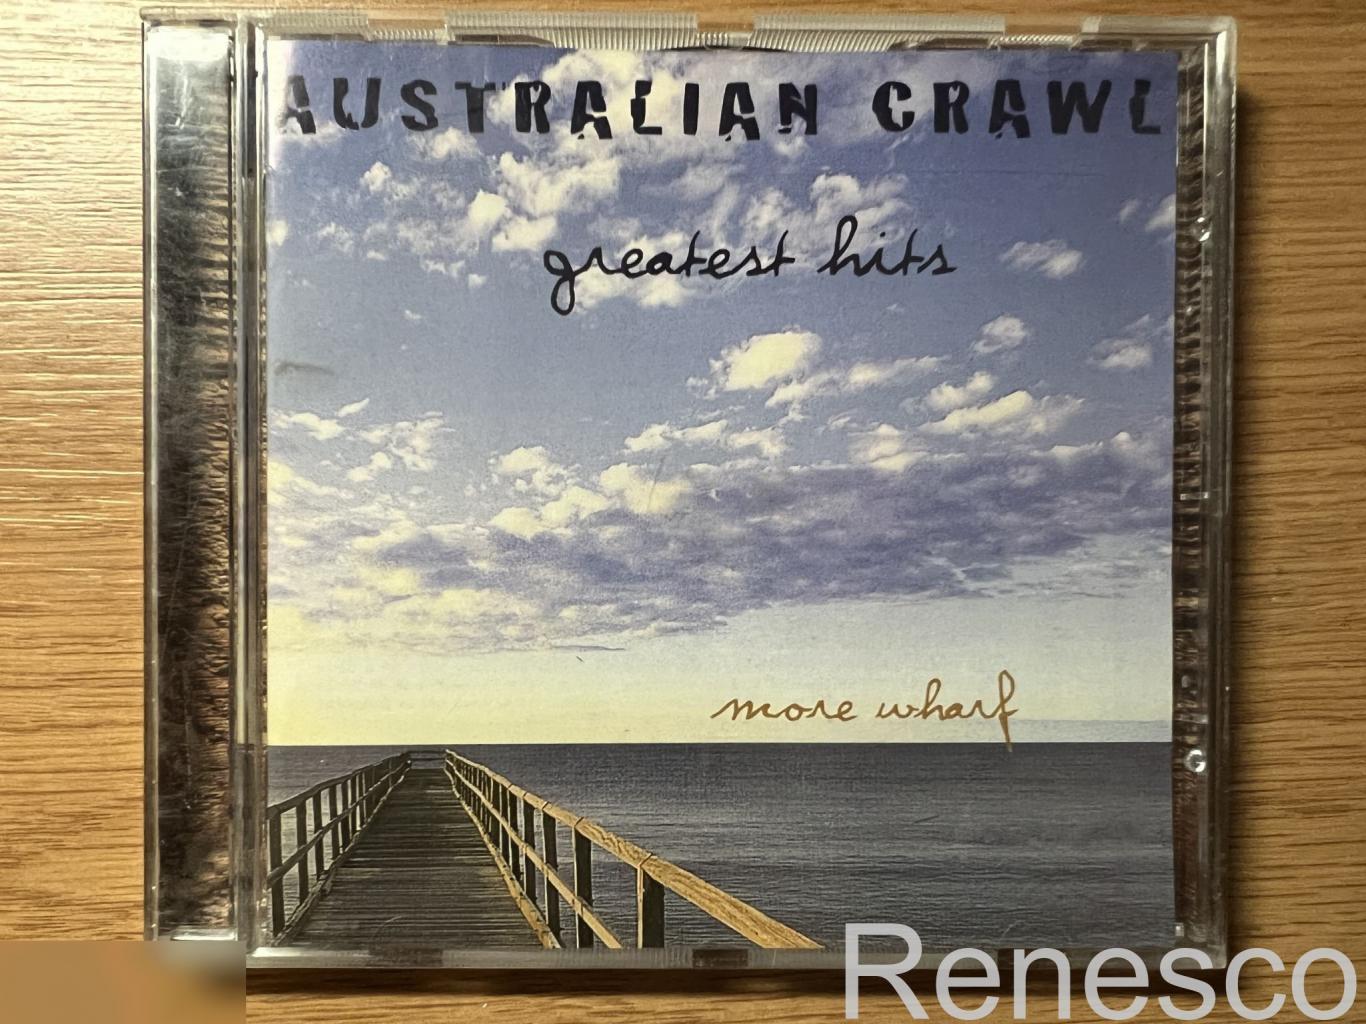 Australian Crawl – Greatest Hits (More Wharf) (Australia) (1998)